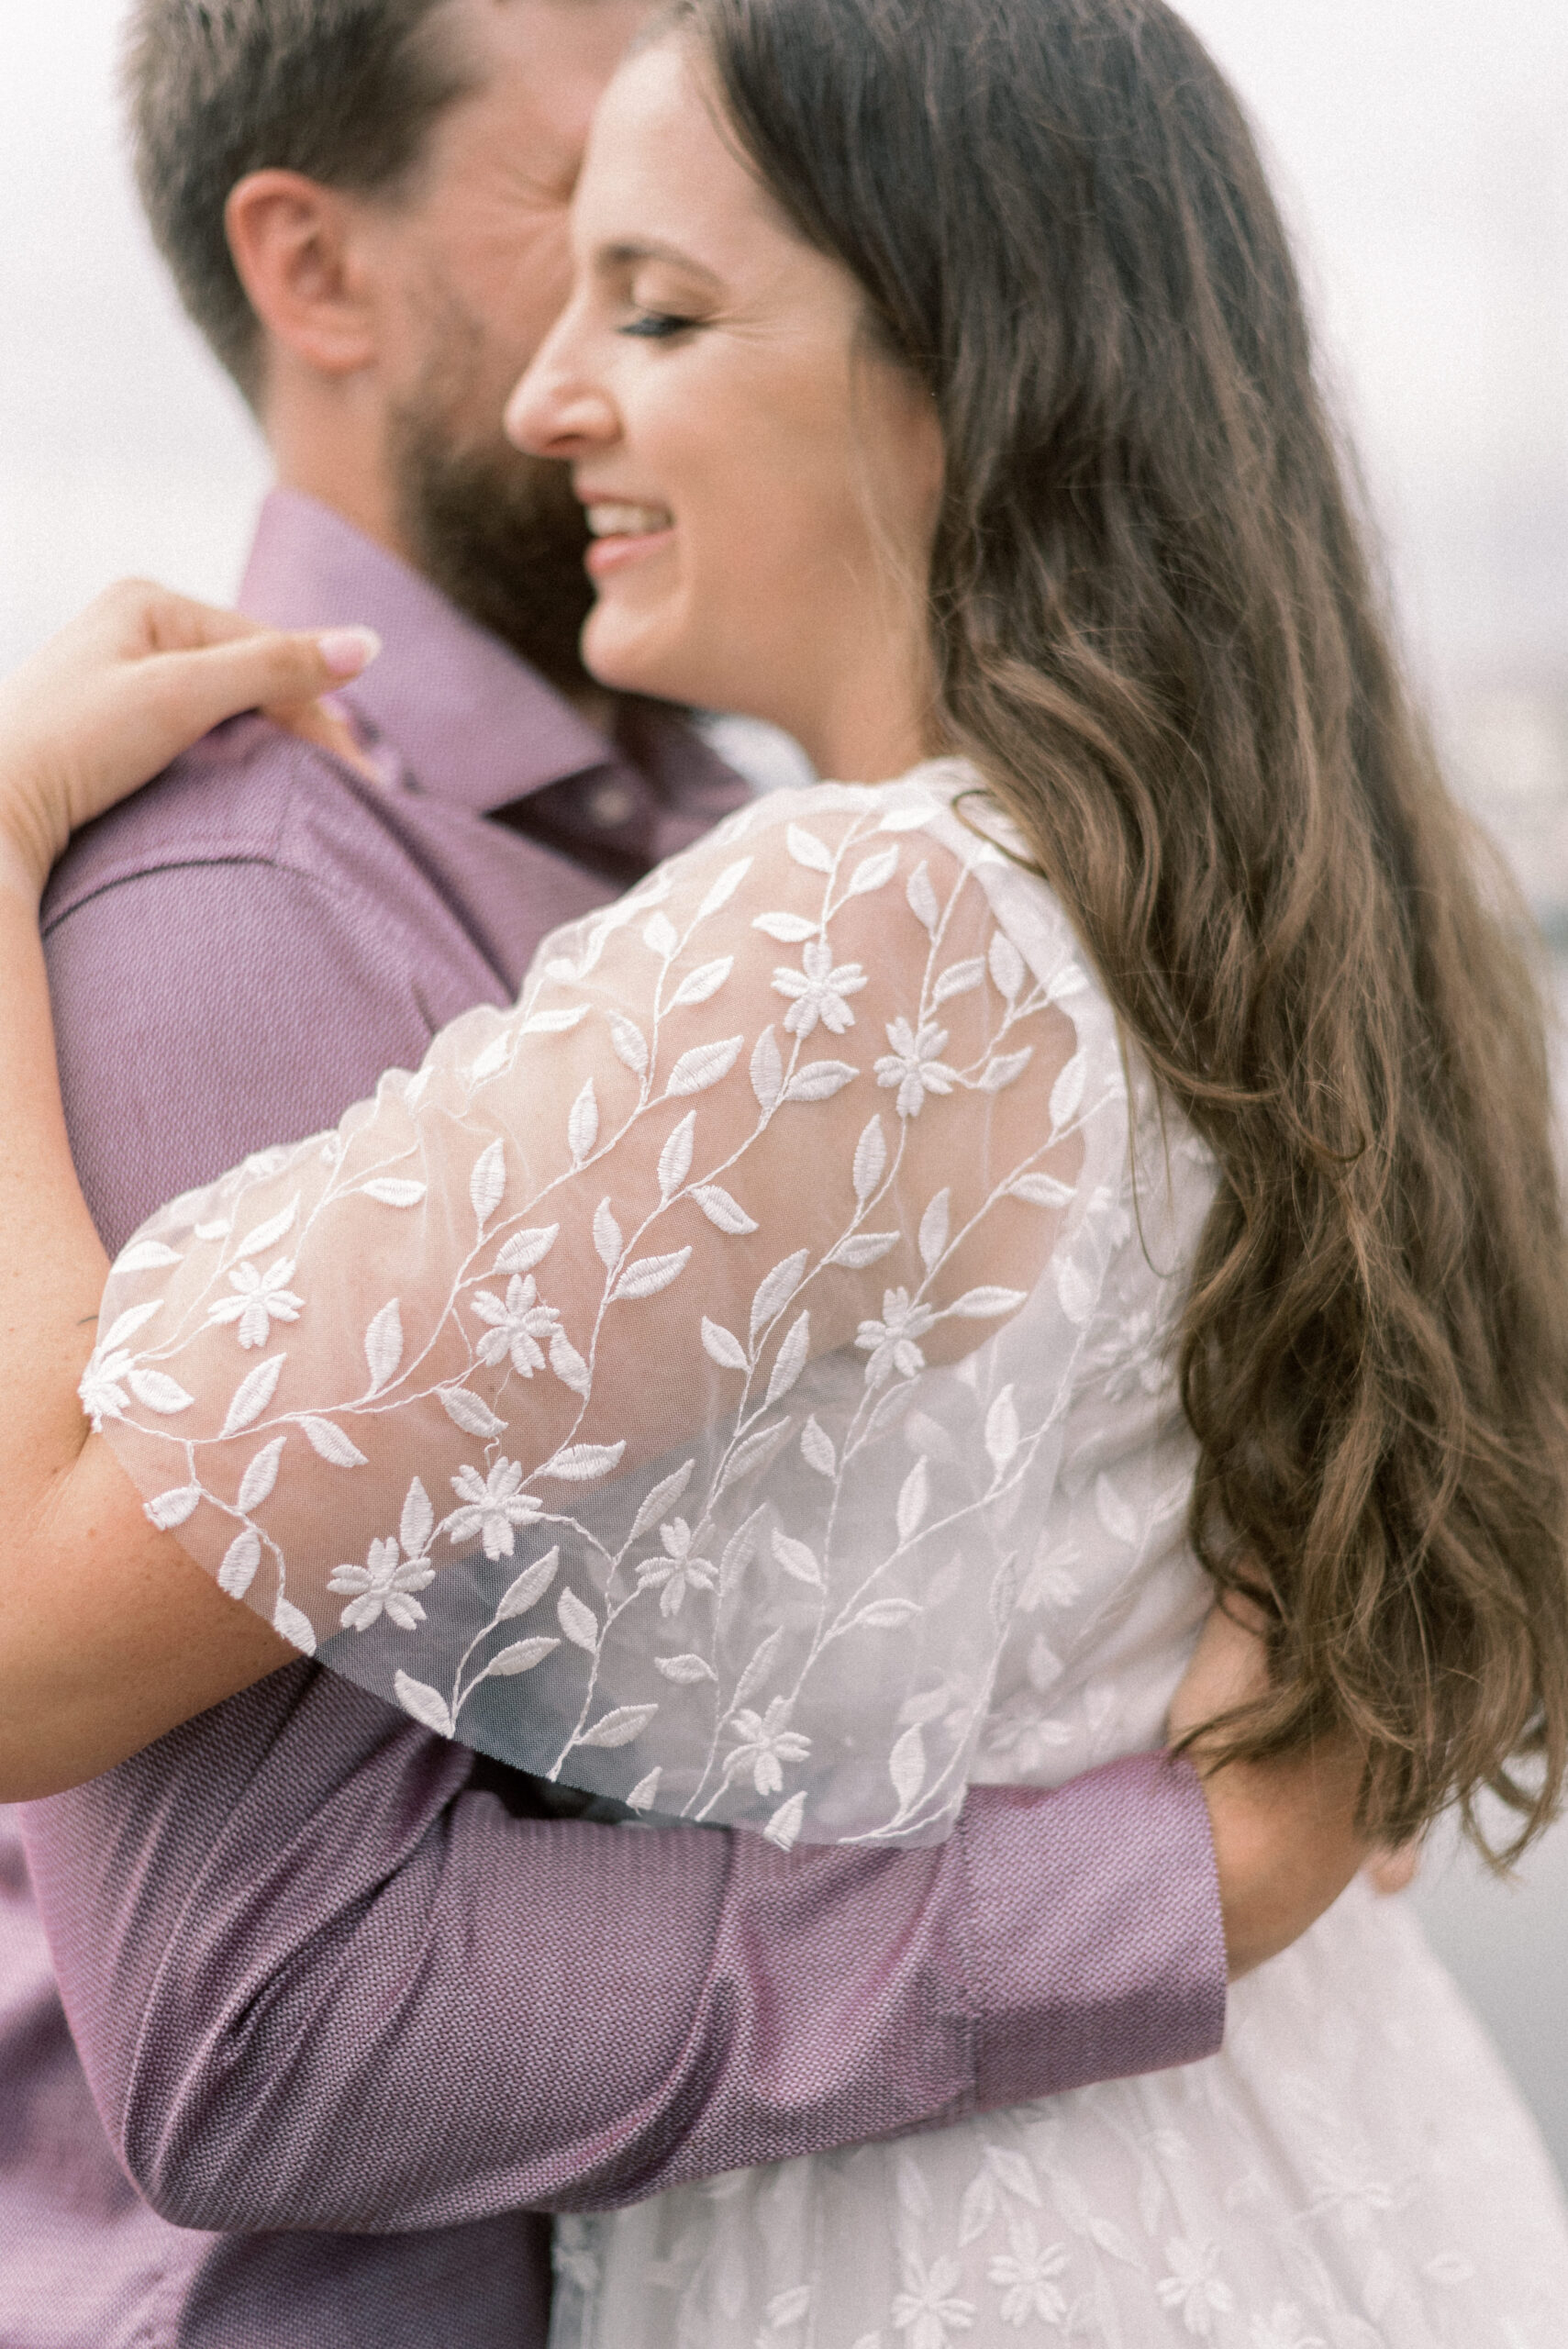 Pennsylvania wedding photographer captures woman wearing white dress during engagement photos